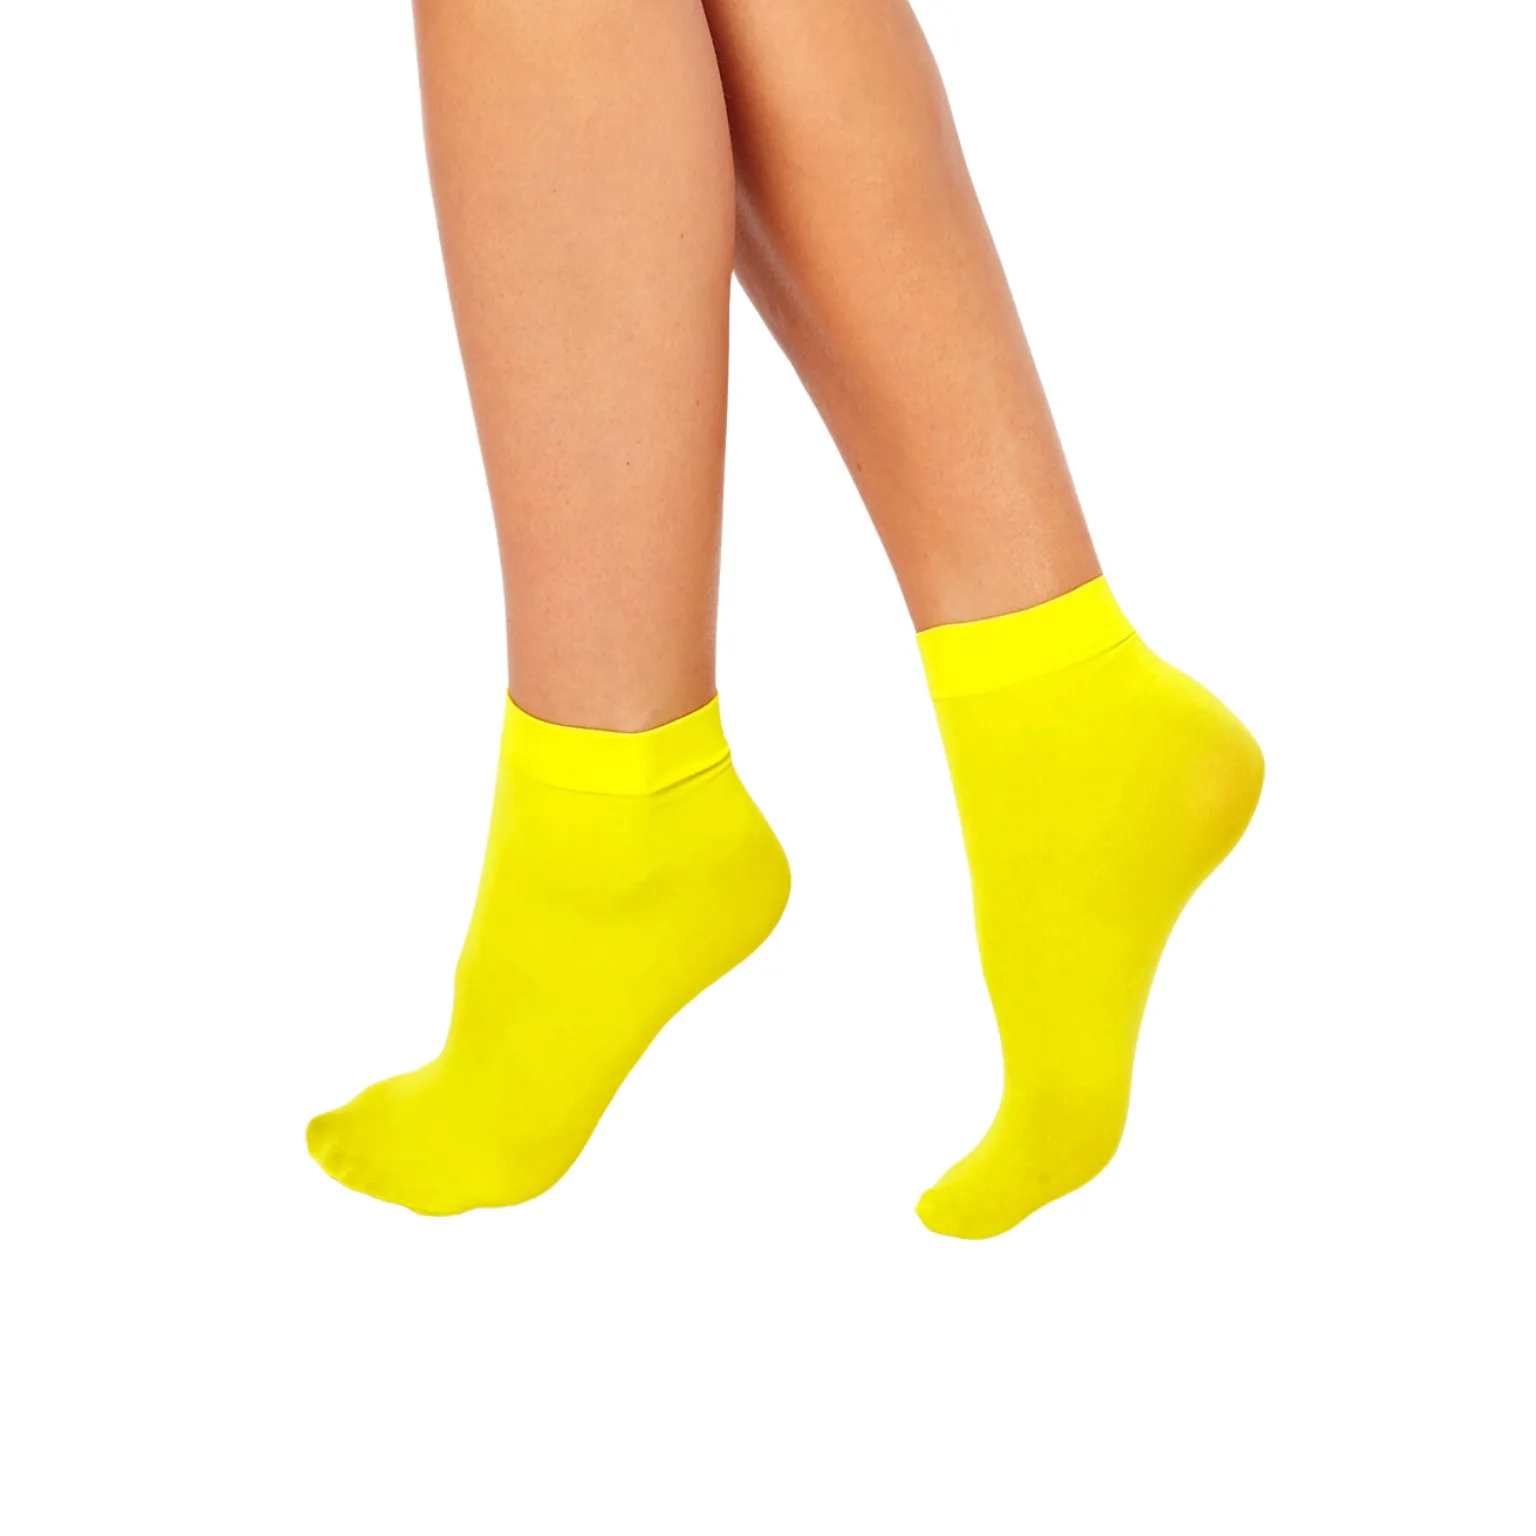 Premium OEM Ankle Socks manufacturing service